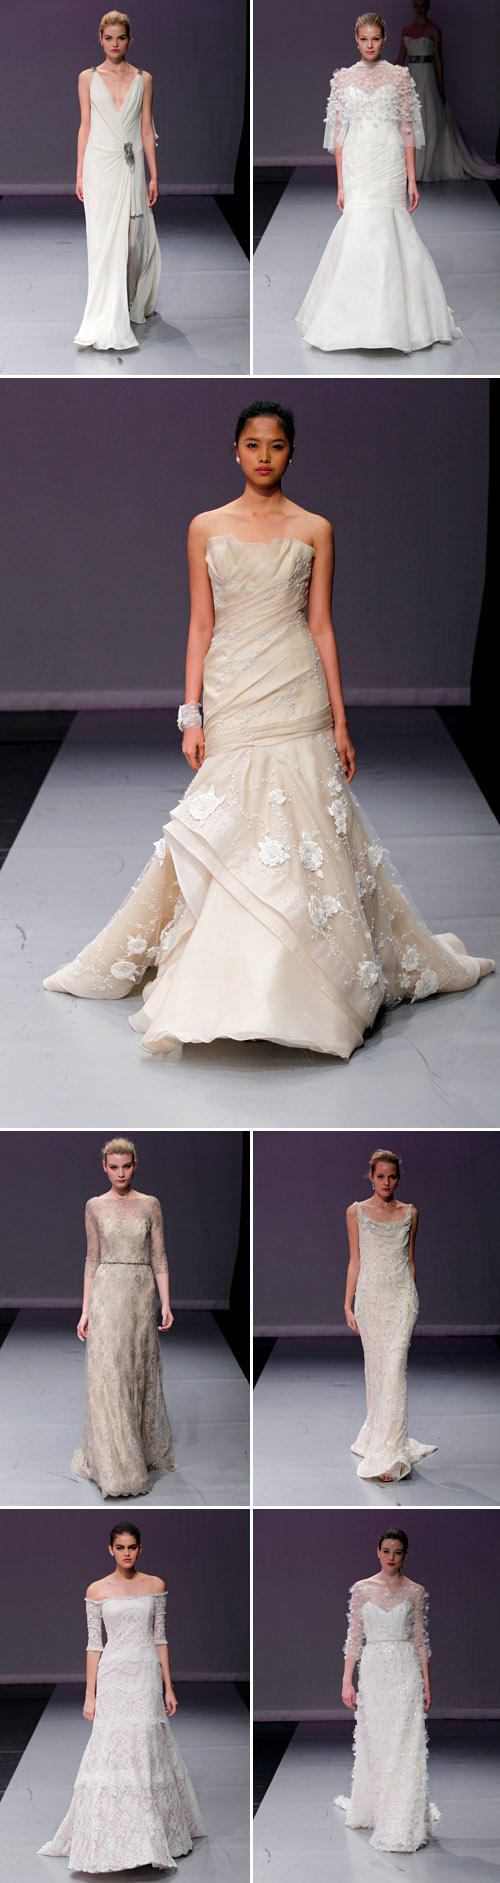 glamorous wedding dresses from Rivini Fall/Winter 2012 bridal market runway show